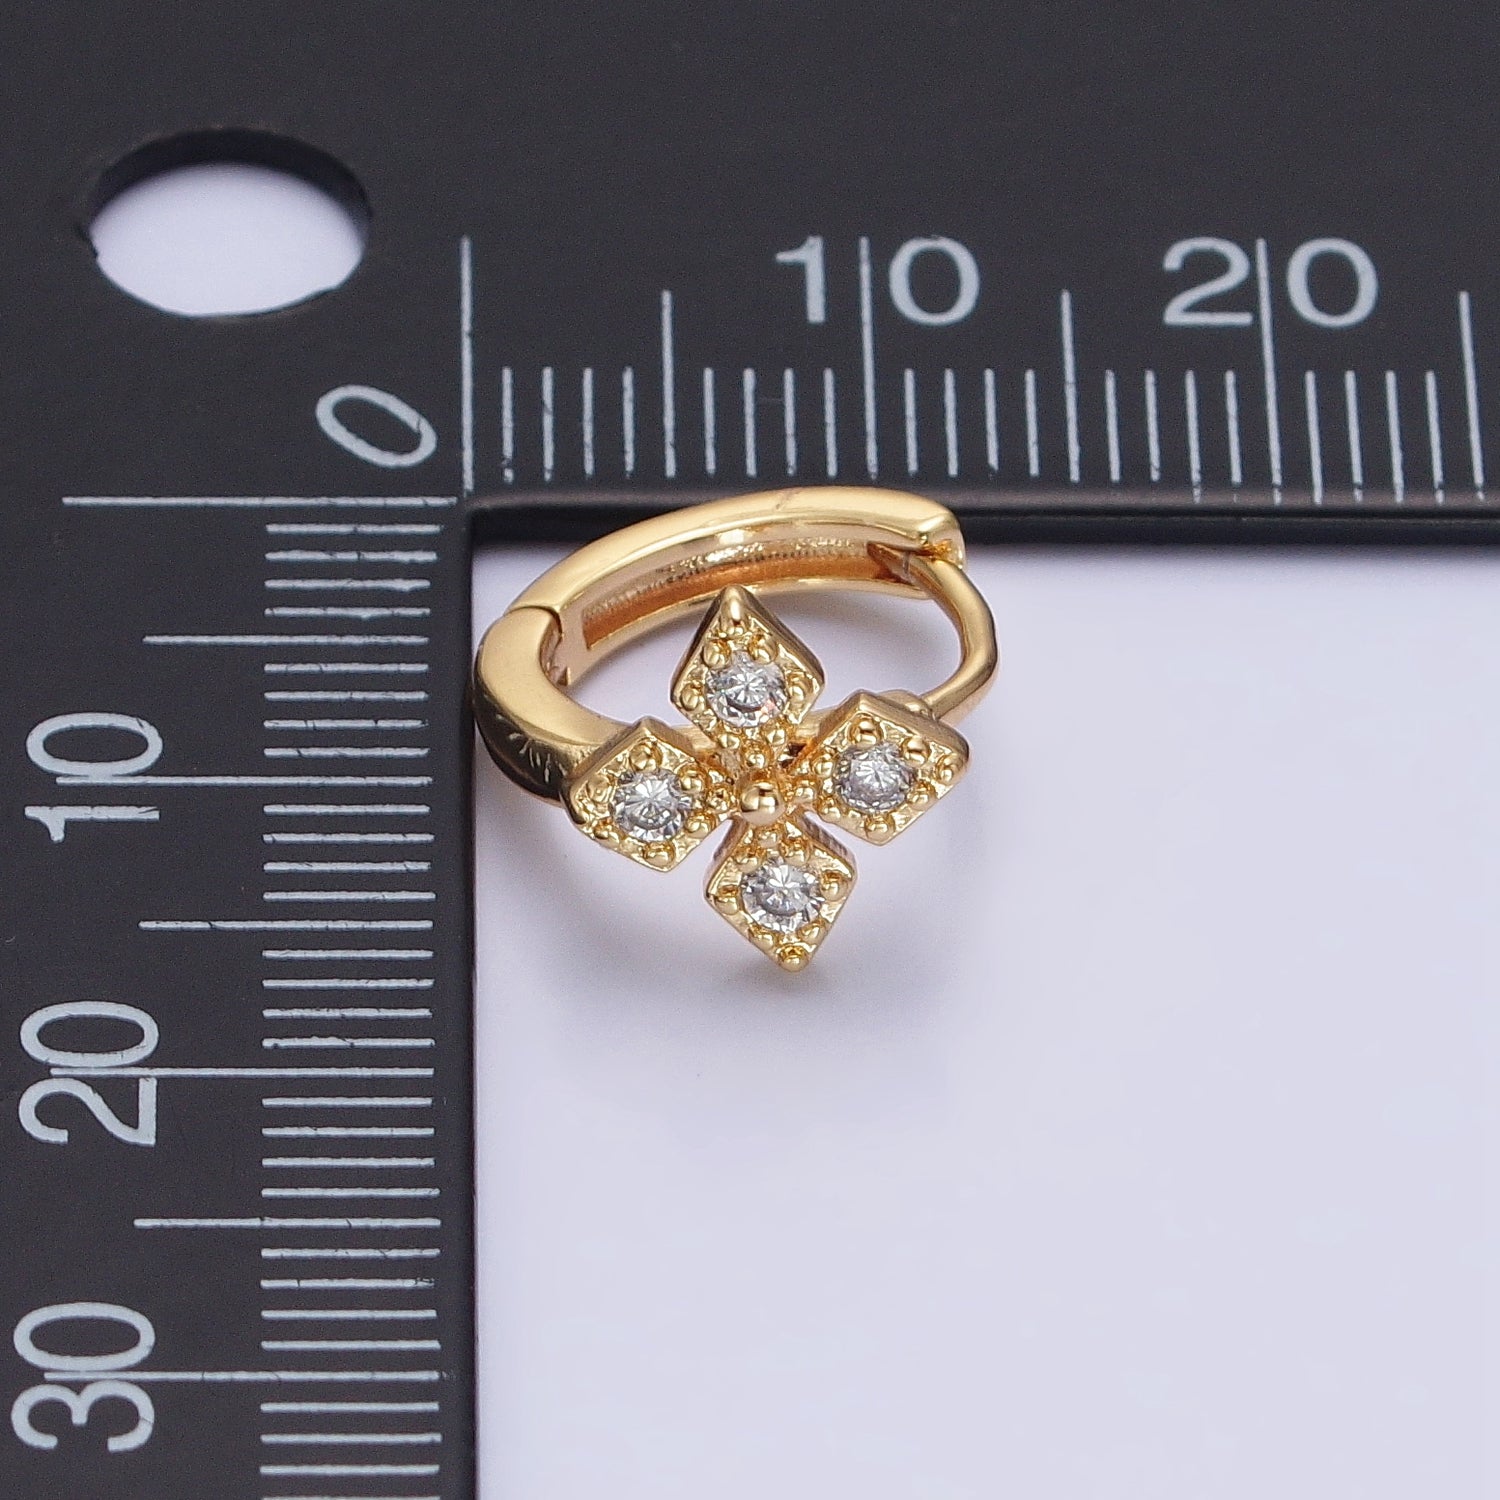 16K Gold Filled Cross Geometric CZ Huggie Earrings in Gold & Silver | AB1447 AB1448 - DLUXCA